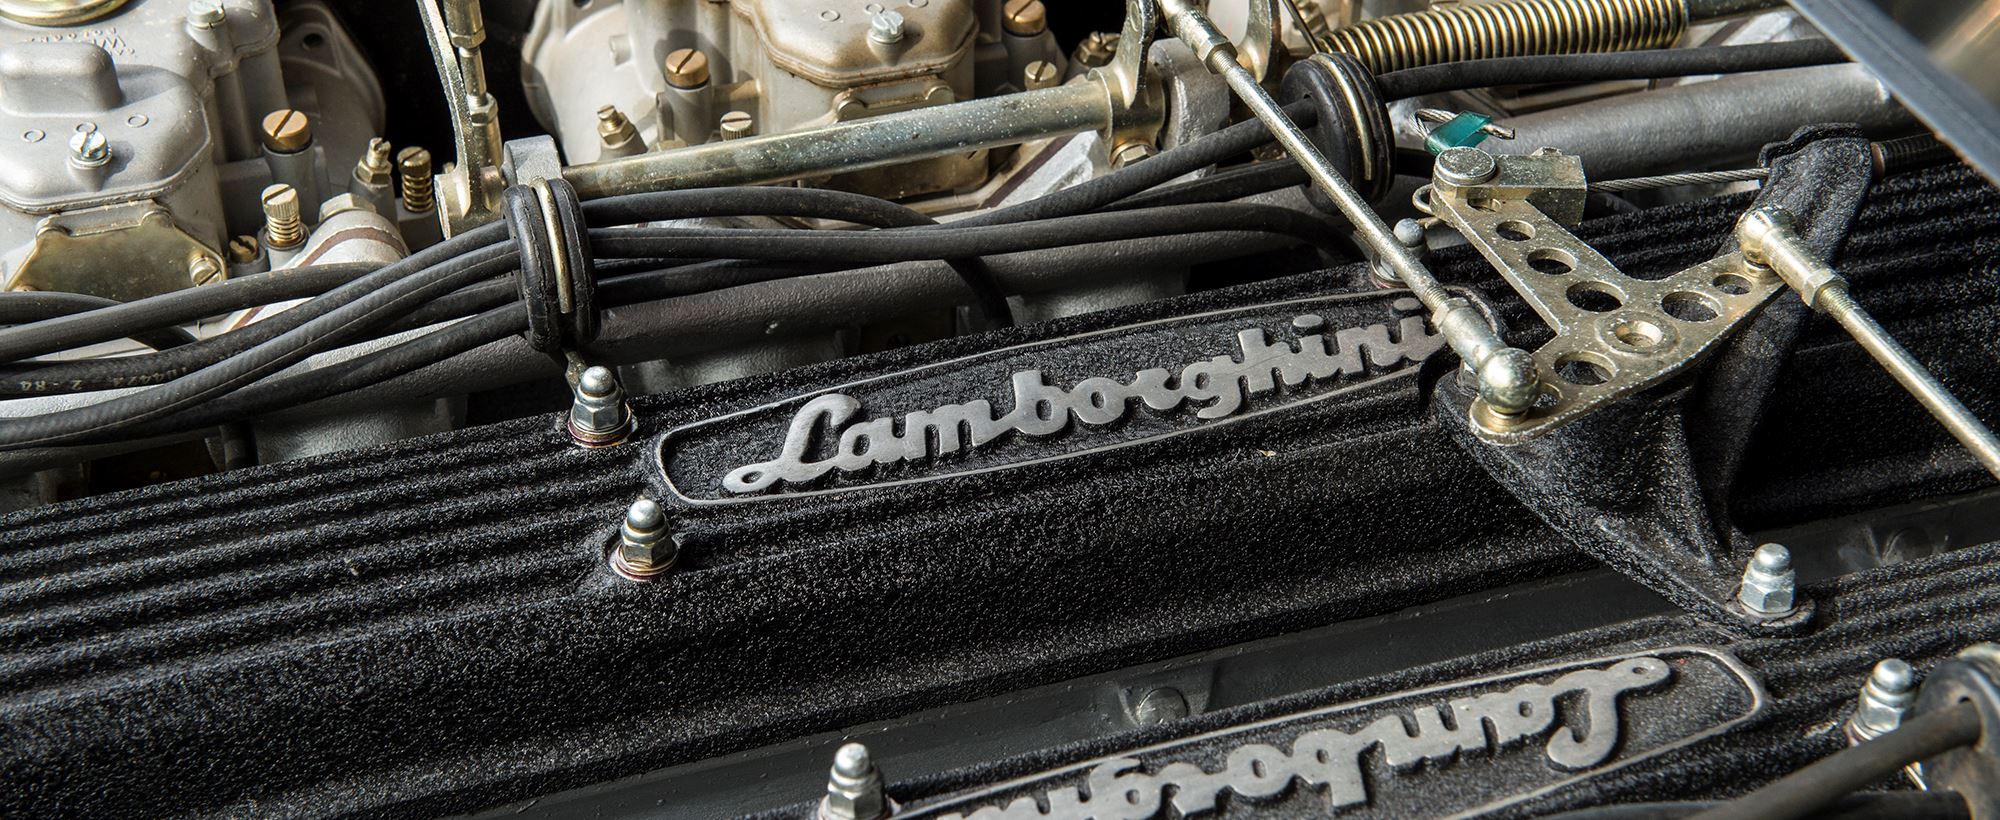 Lamborghini Countach 037s.jpg